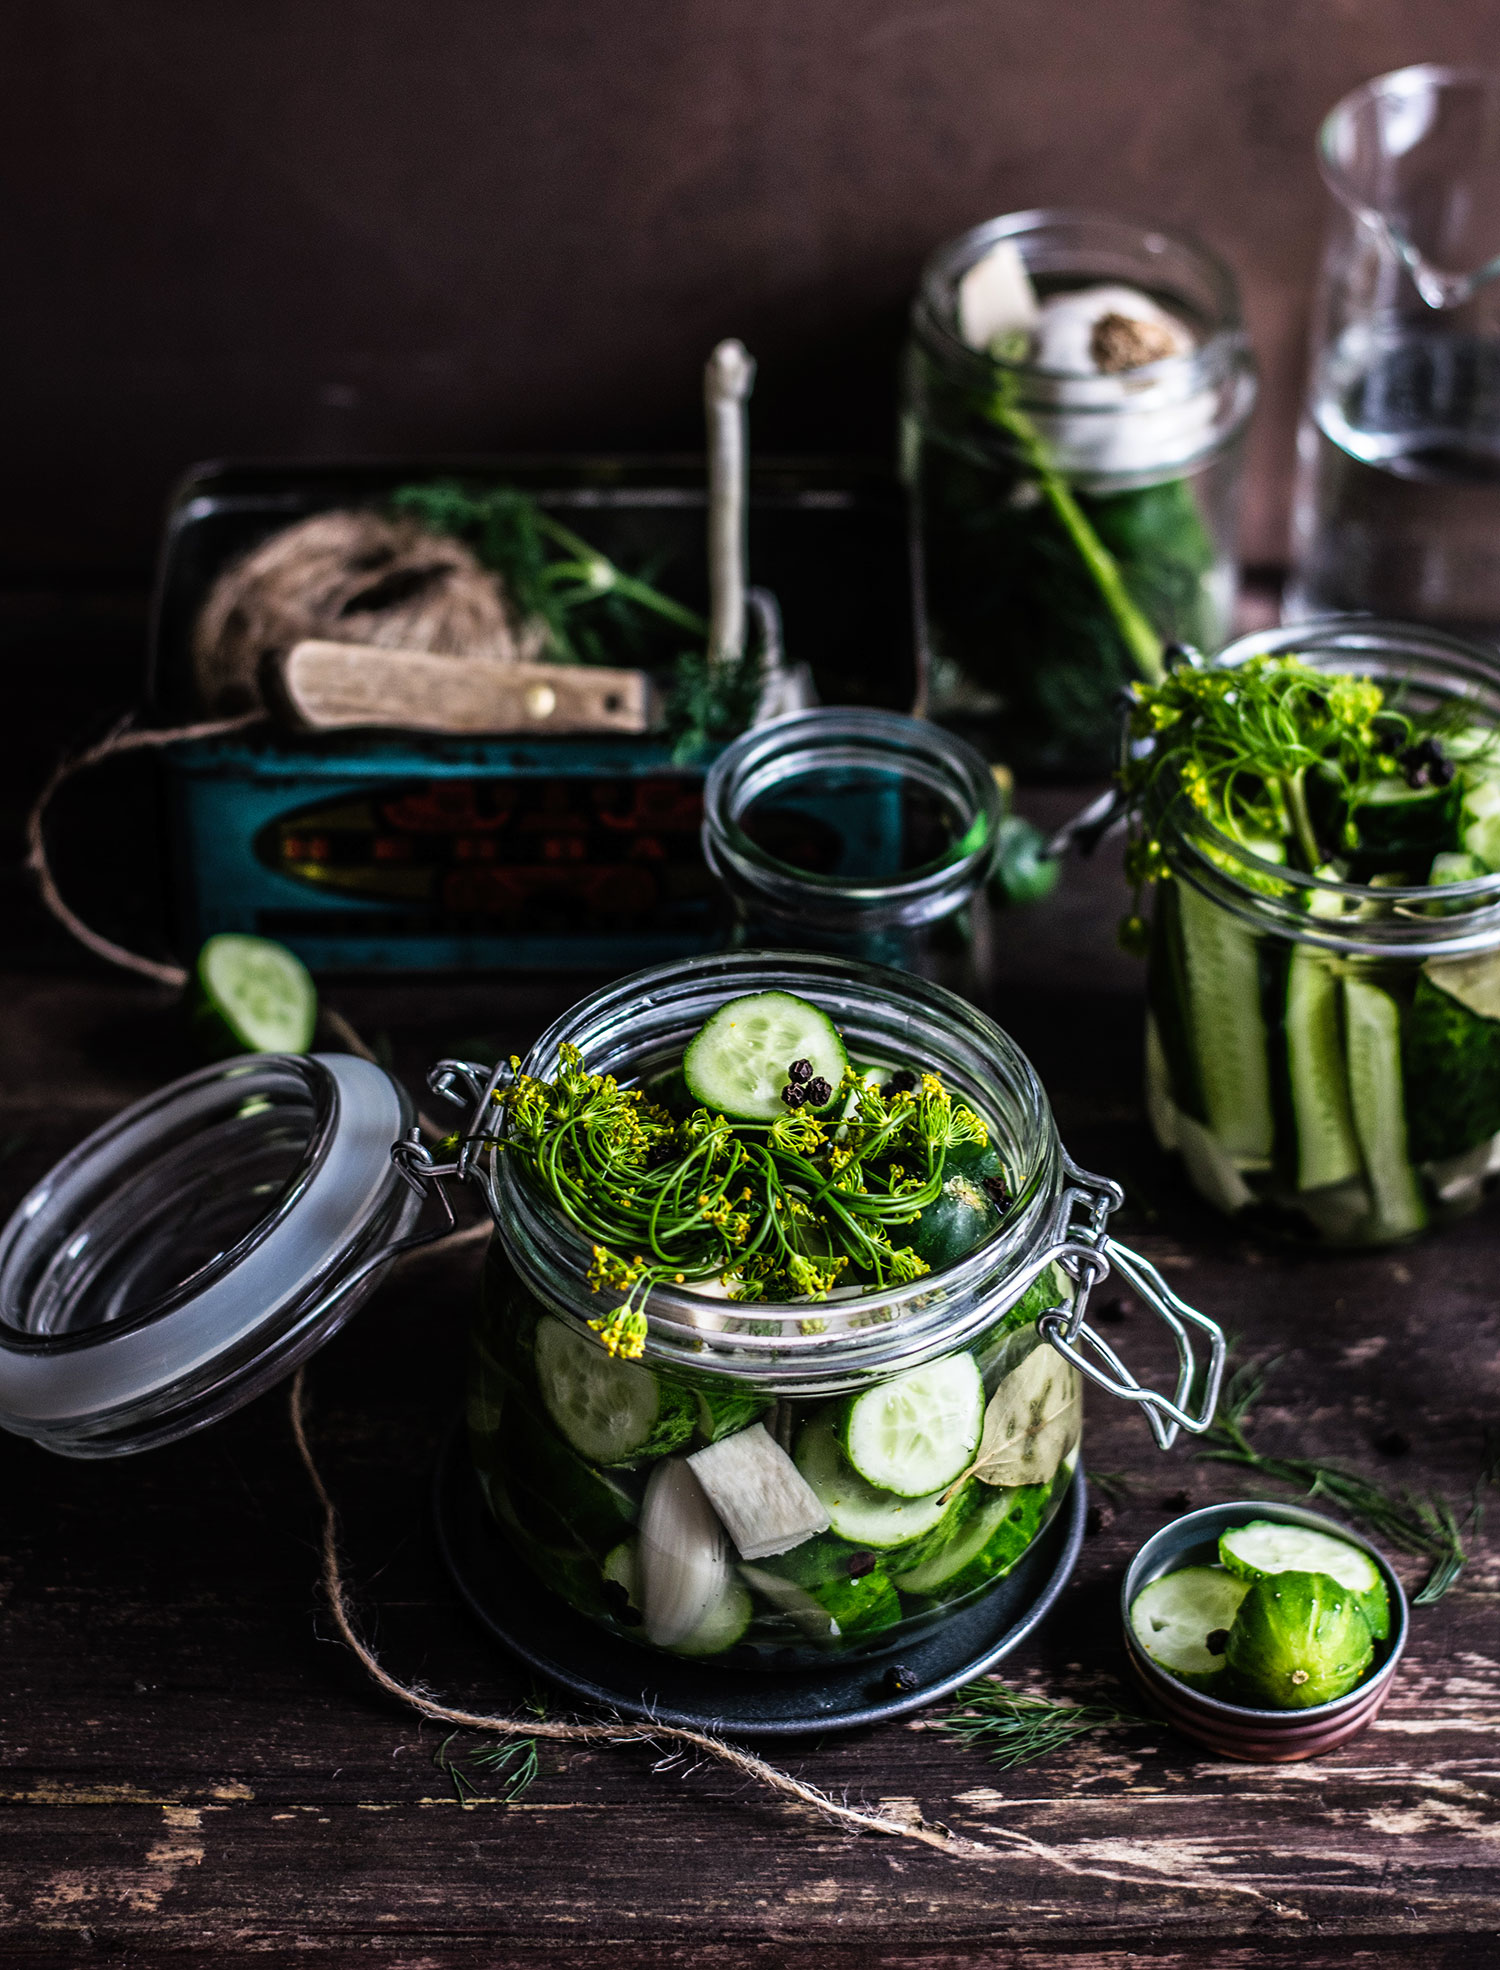 Pickling can be a beautiful art form - Photo: Monika Grabkowska